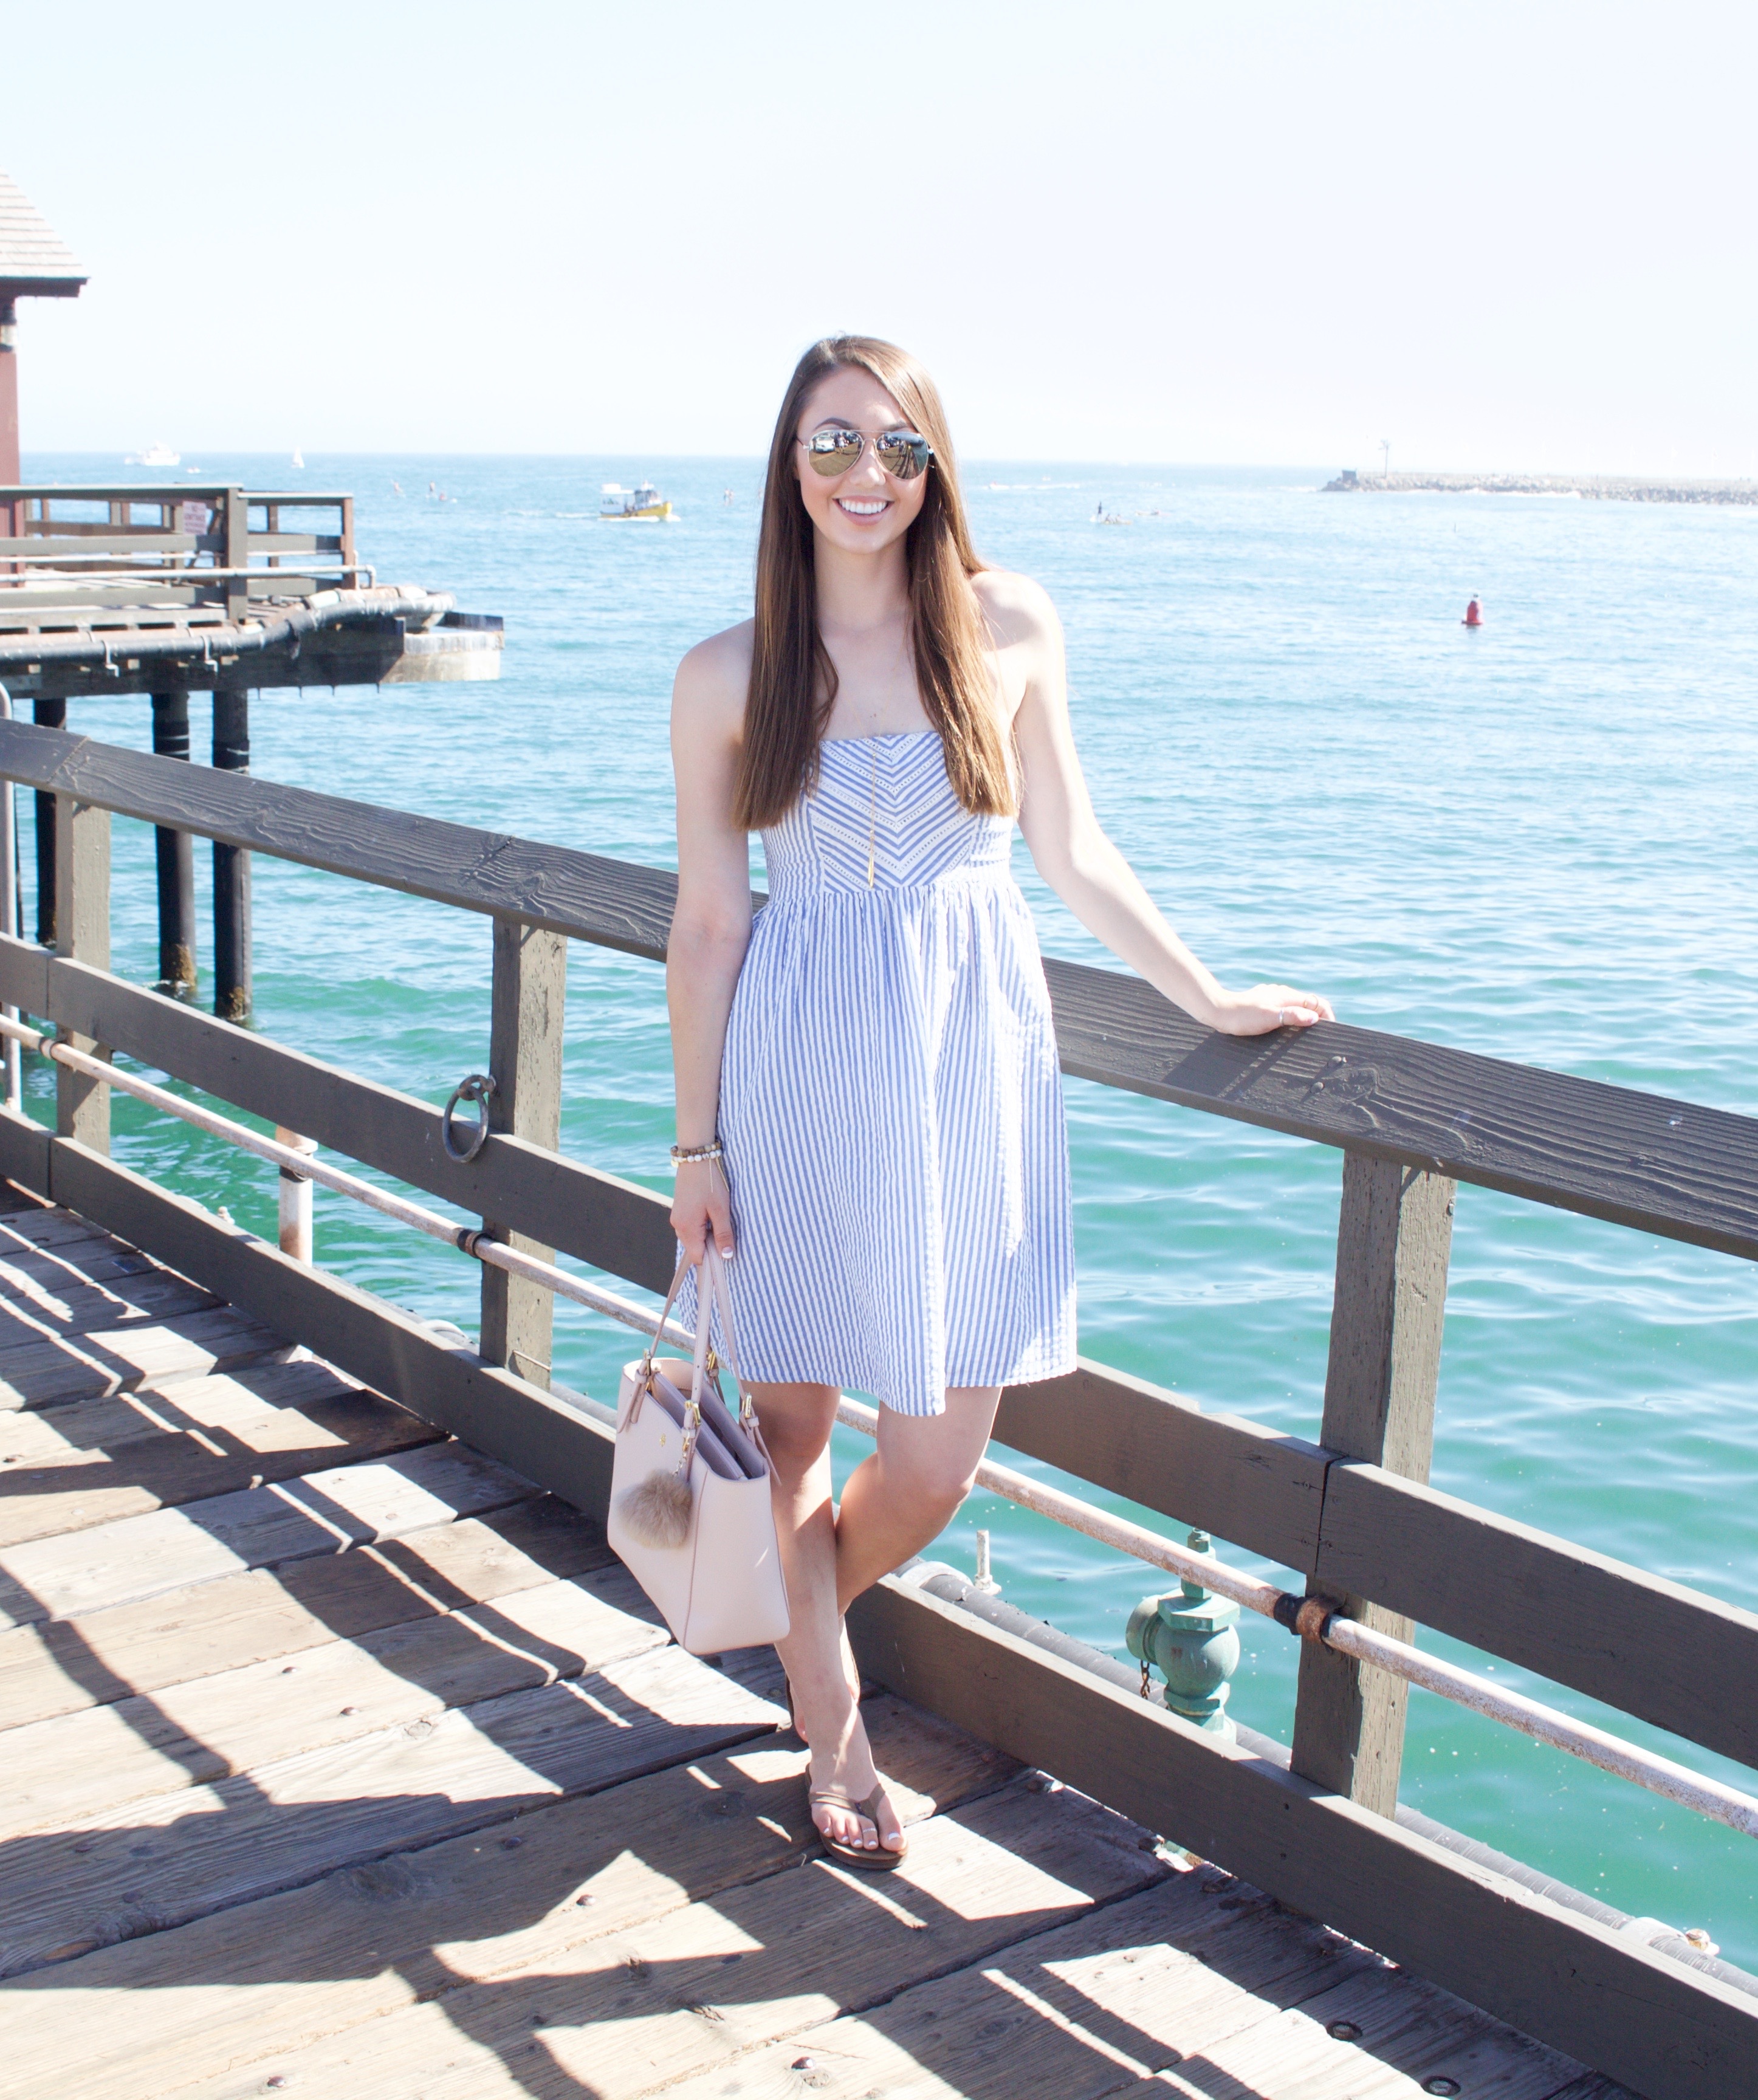 Santa Barbara, California day trip - Stearns Wharf - My Styled Life